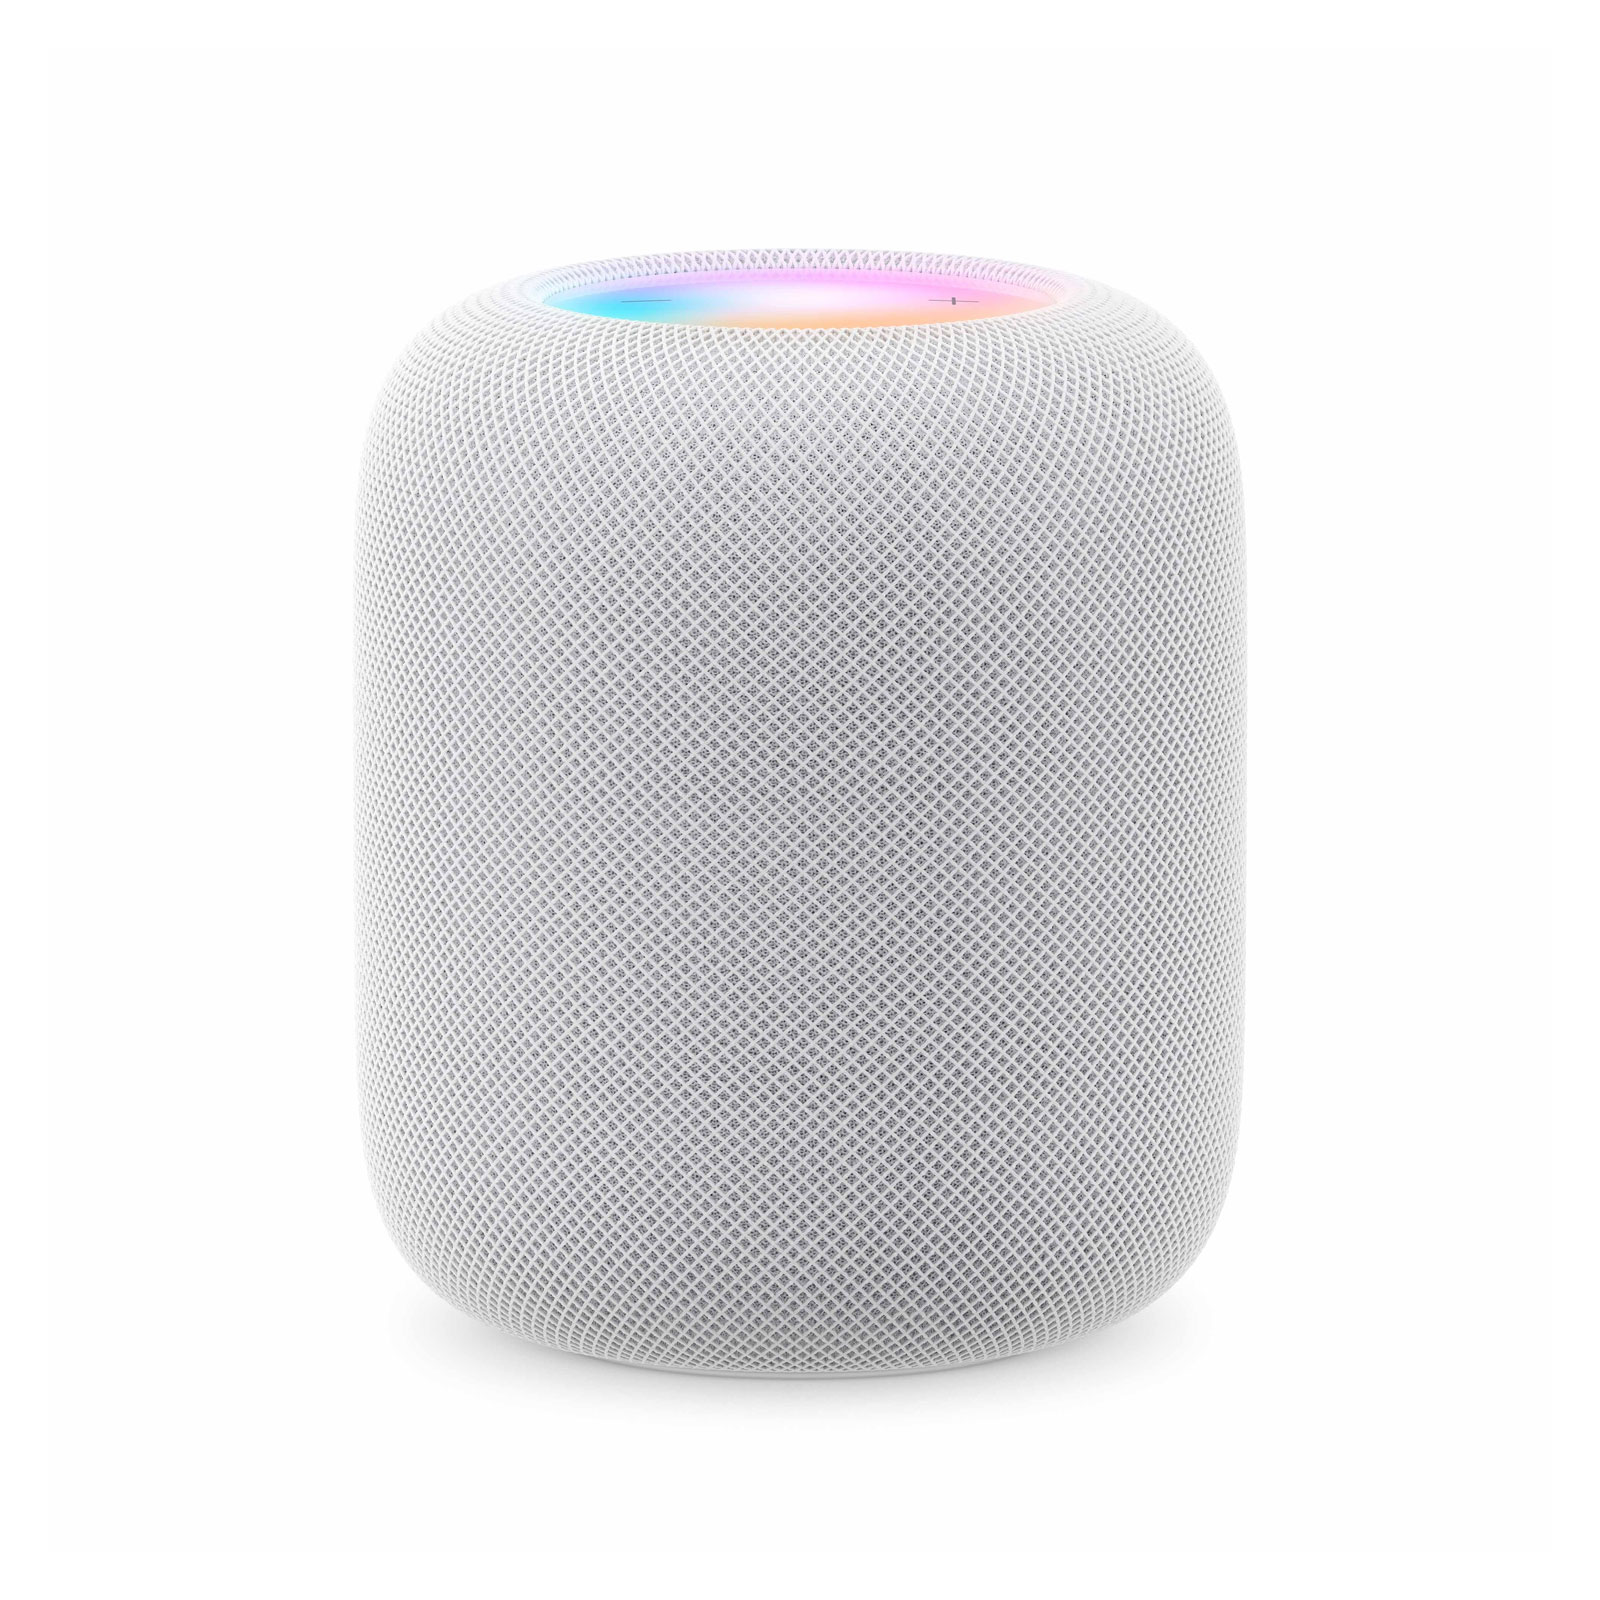 Apple HomePod white (2. Generation) (Multiroom)